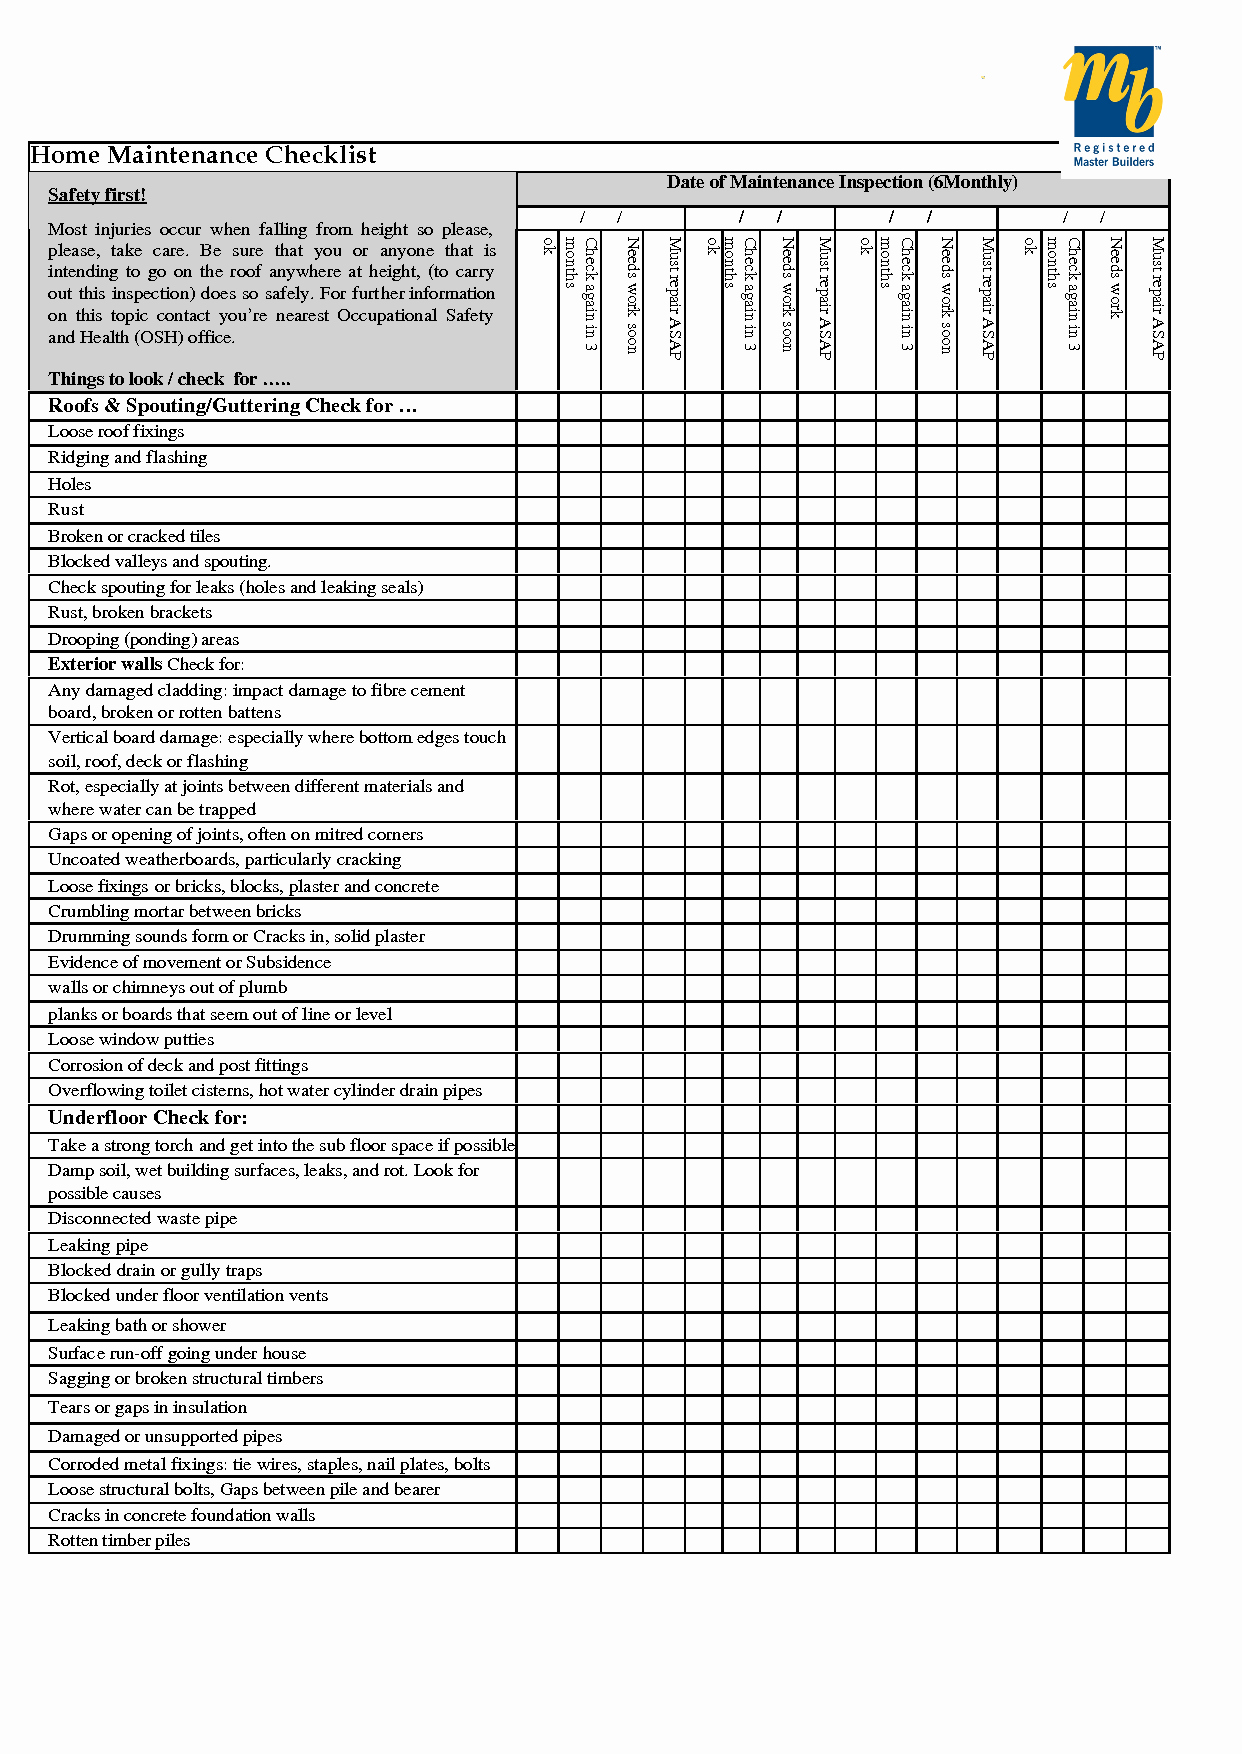 Home Building Checklist Template Awesome Home Maintenance Checklist Printable